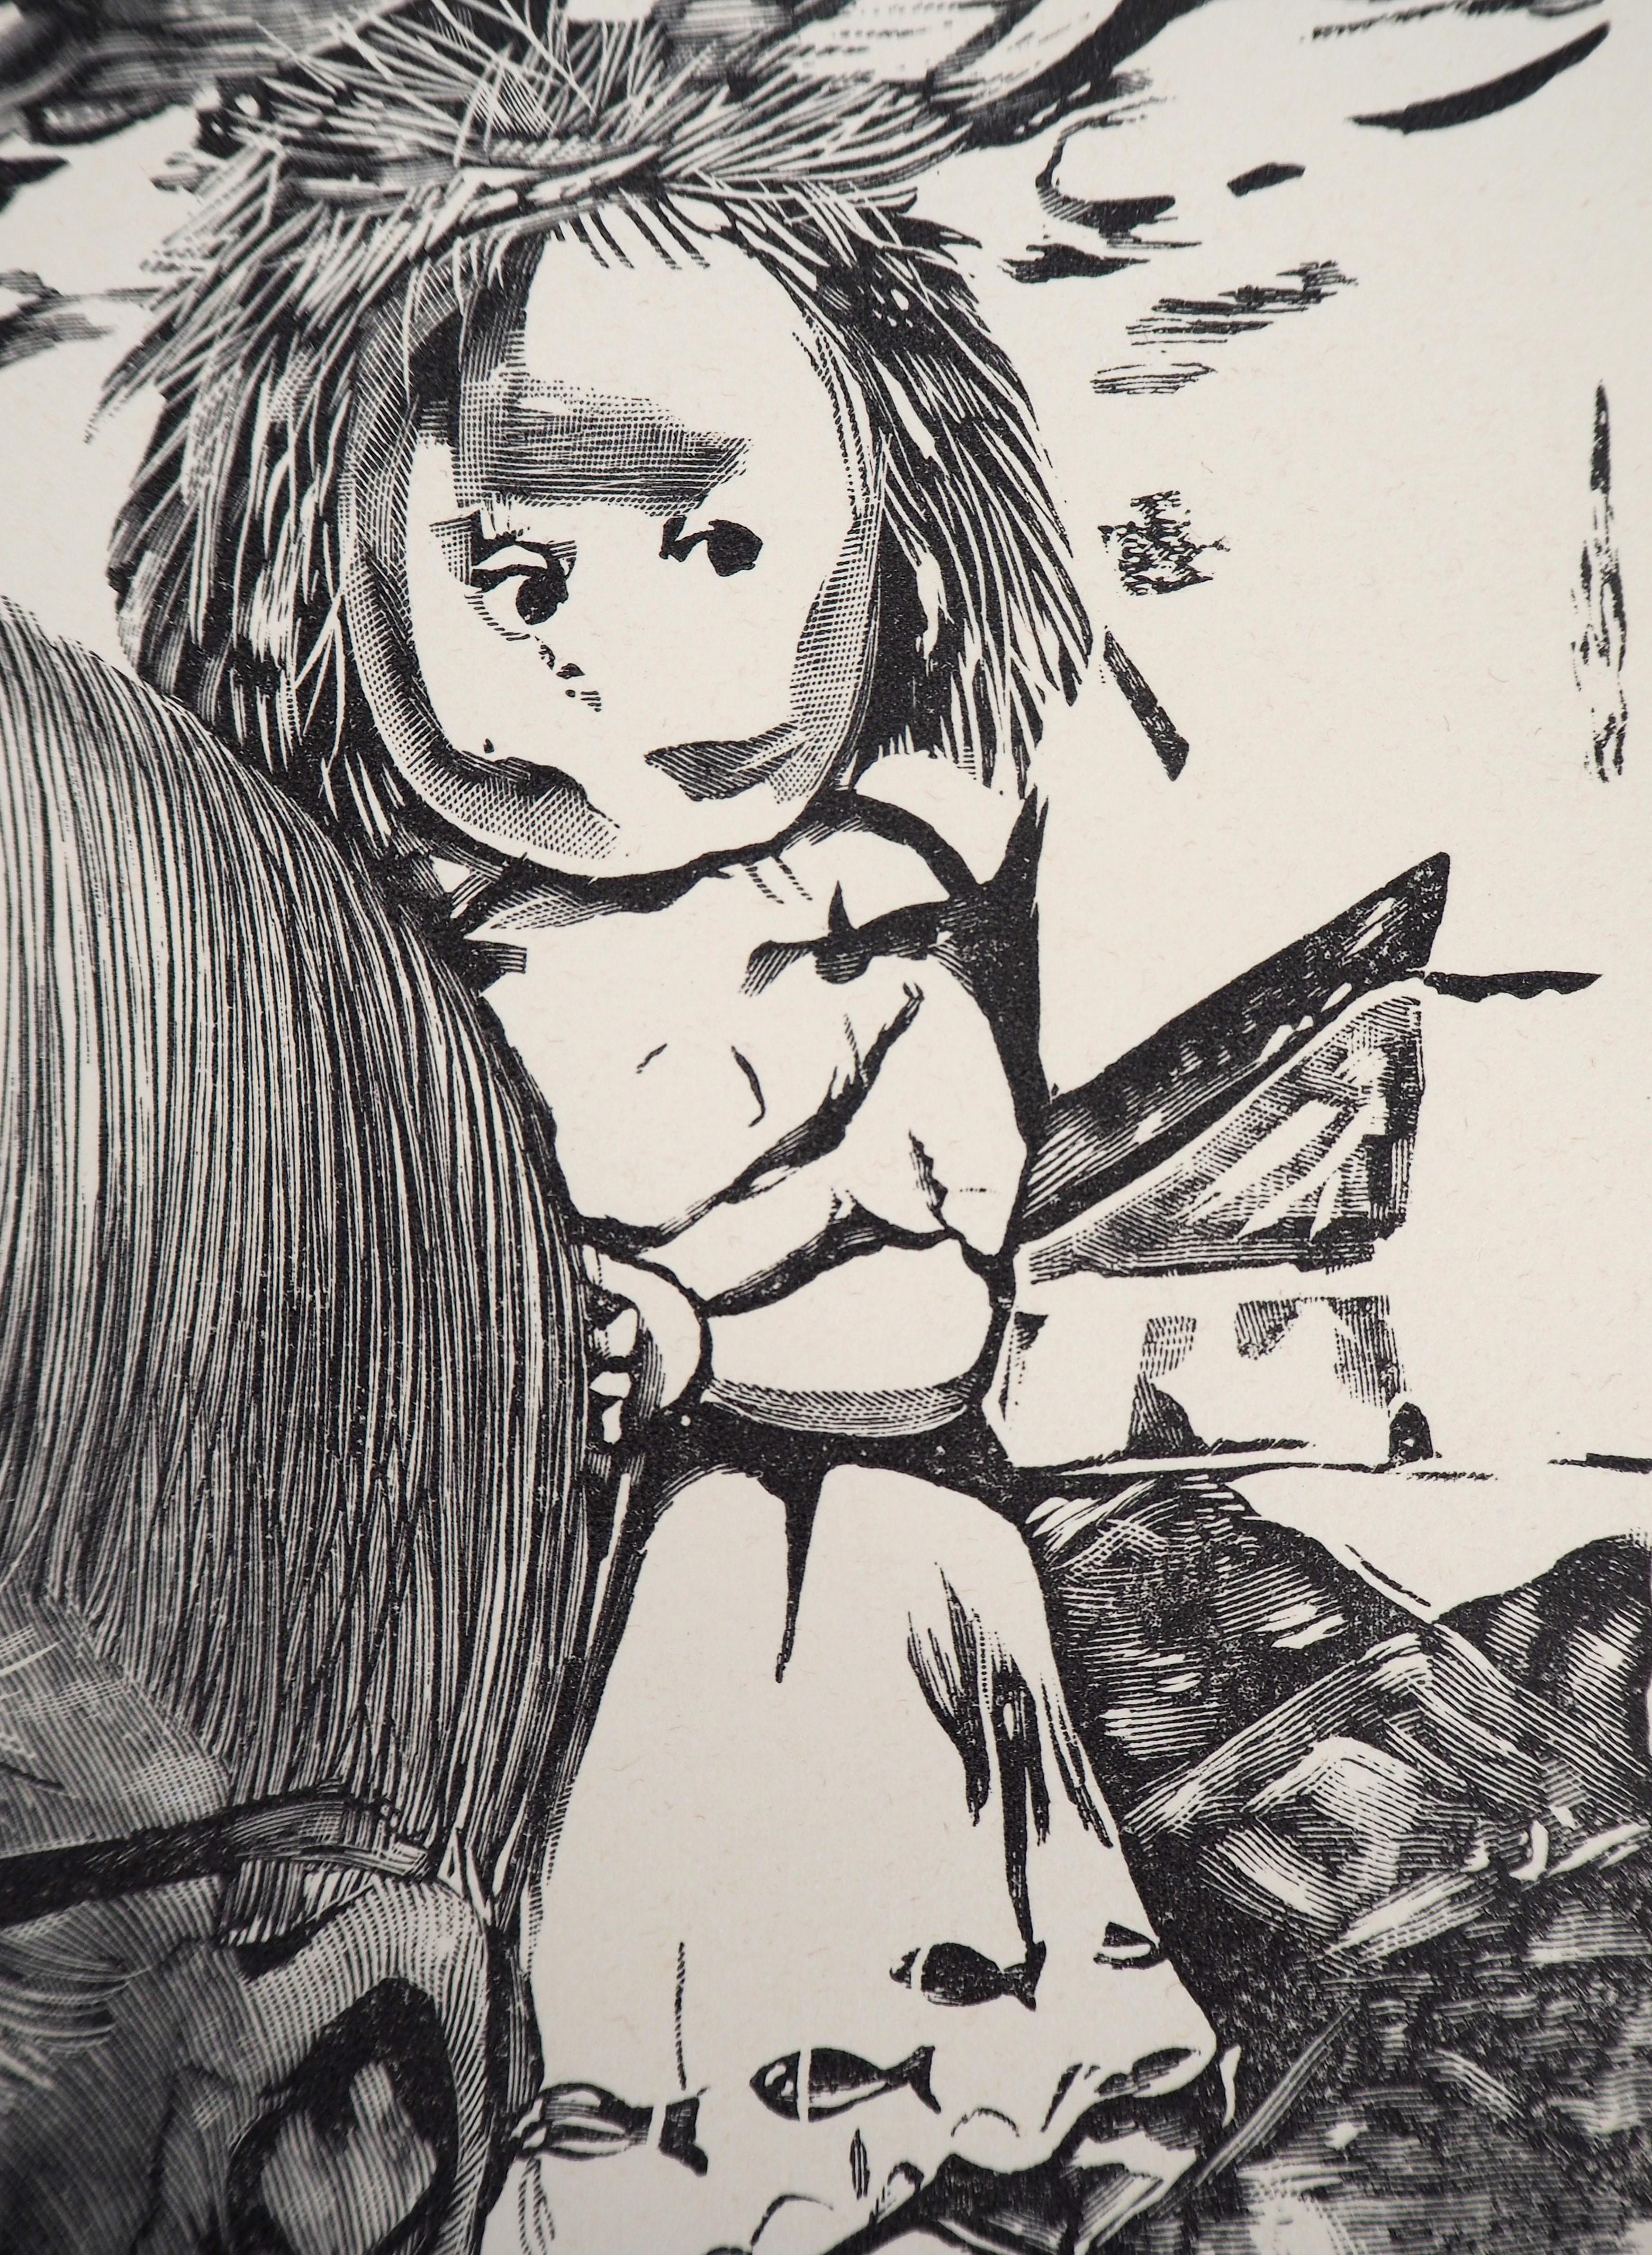 Leonard Tsuguharu FOUJITA
Self Portrait With Children, 1960

Original woodcut
On vellum 37 x 28 cm (c. 15 x 11 in)

REFERENCES : Catalogue Raisonne Sylvie Buisson #60.109

Excellent condition